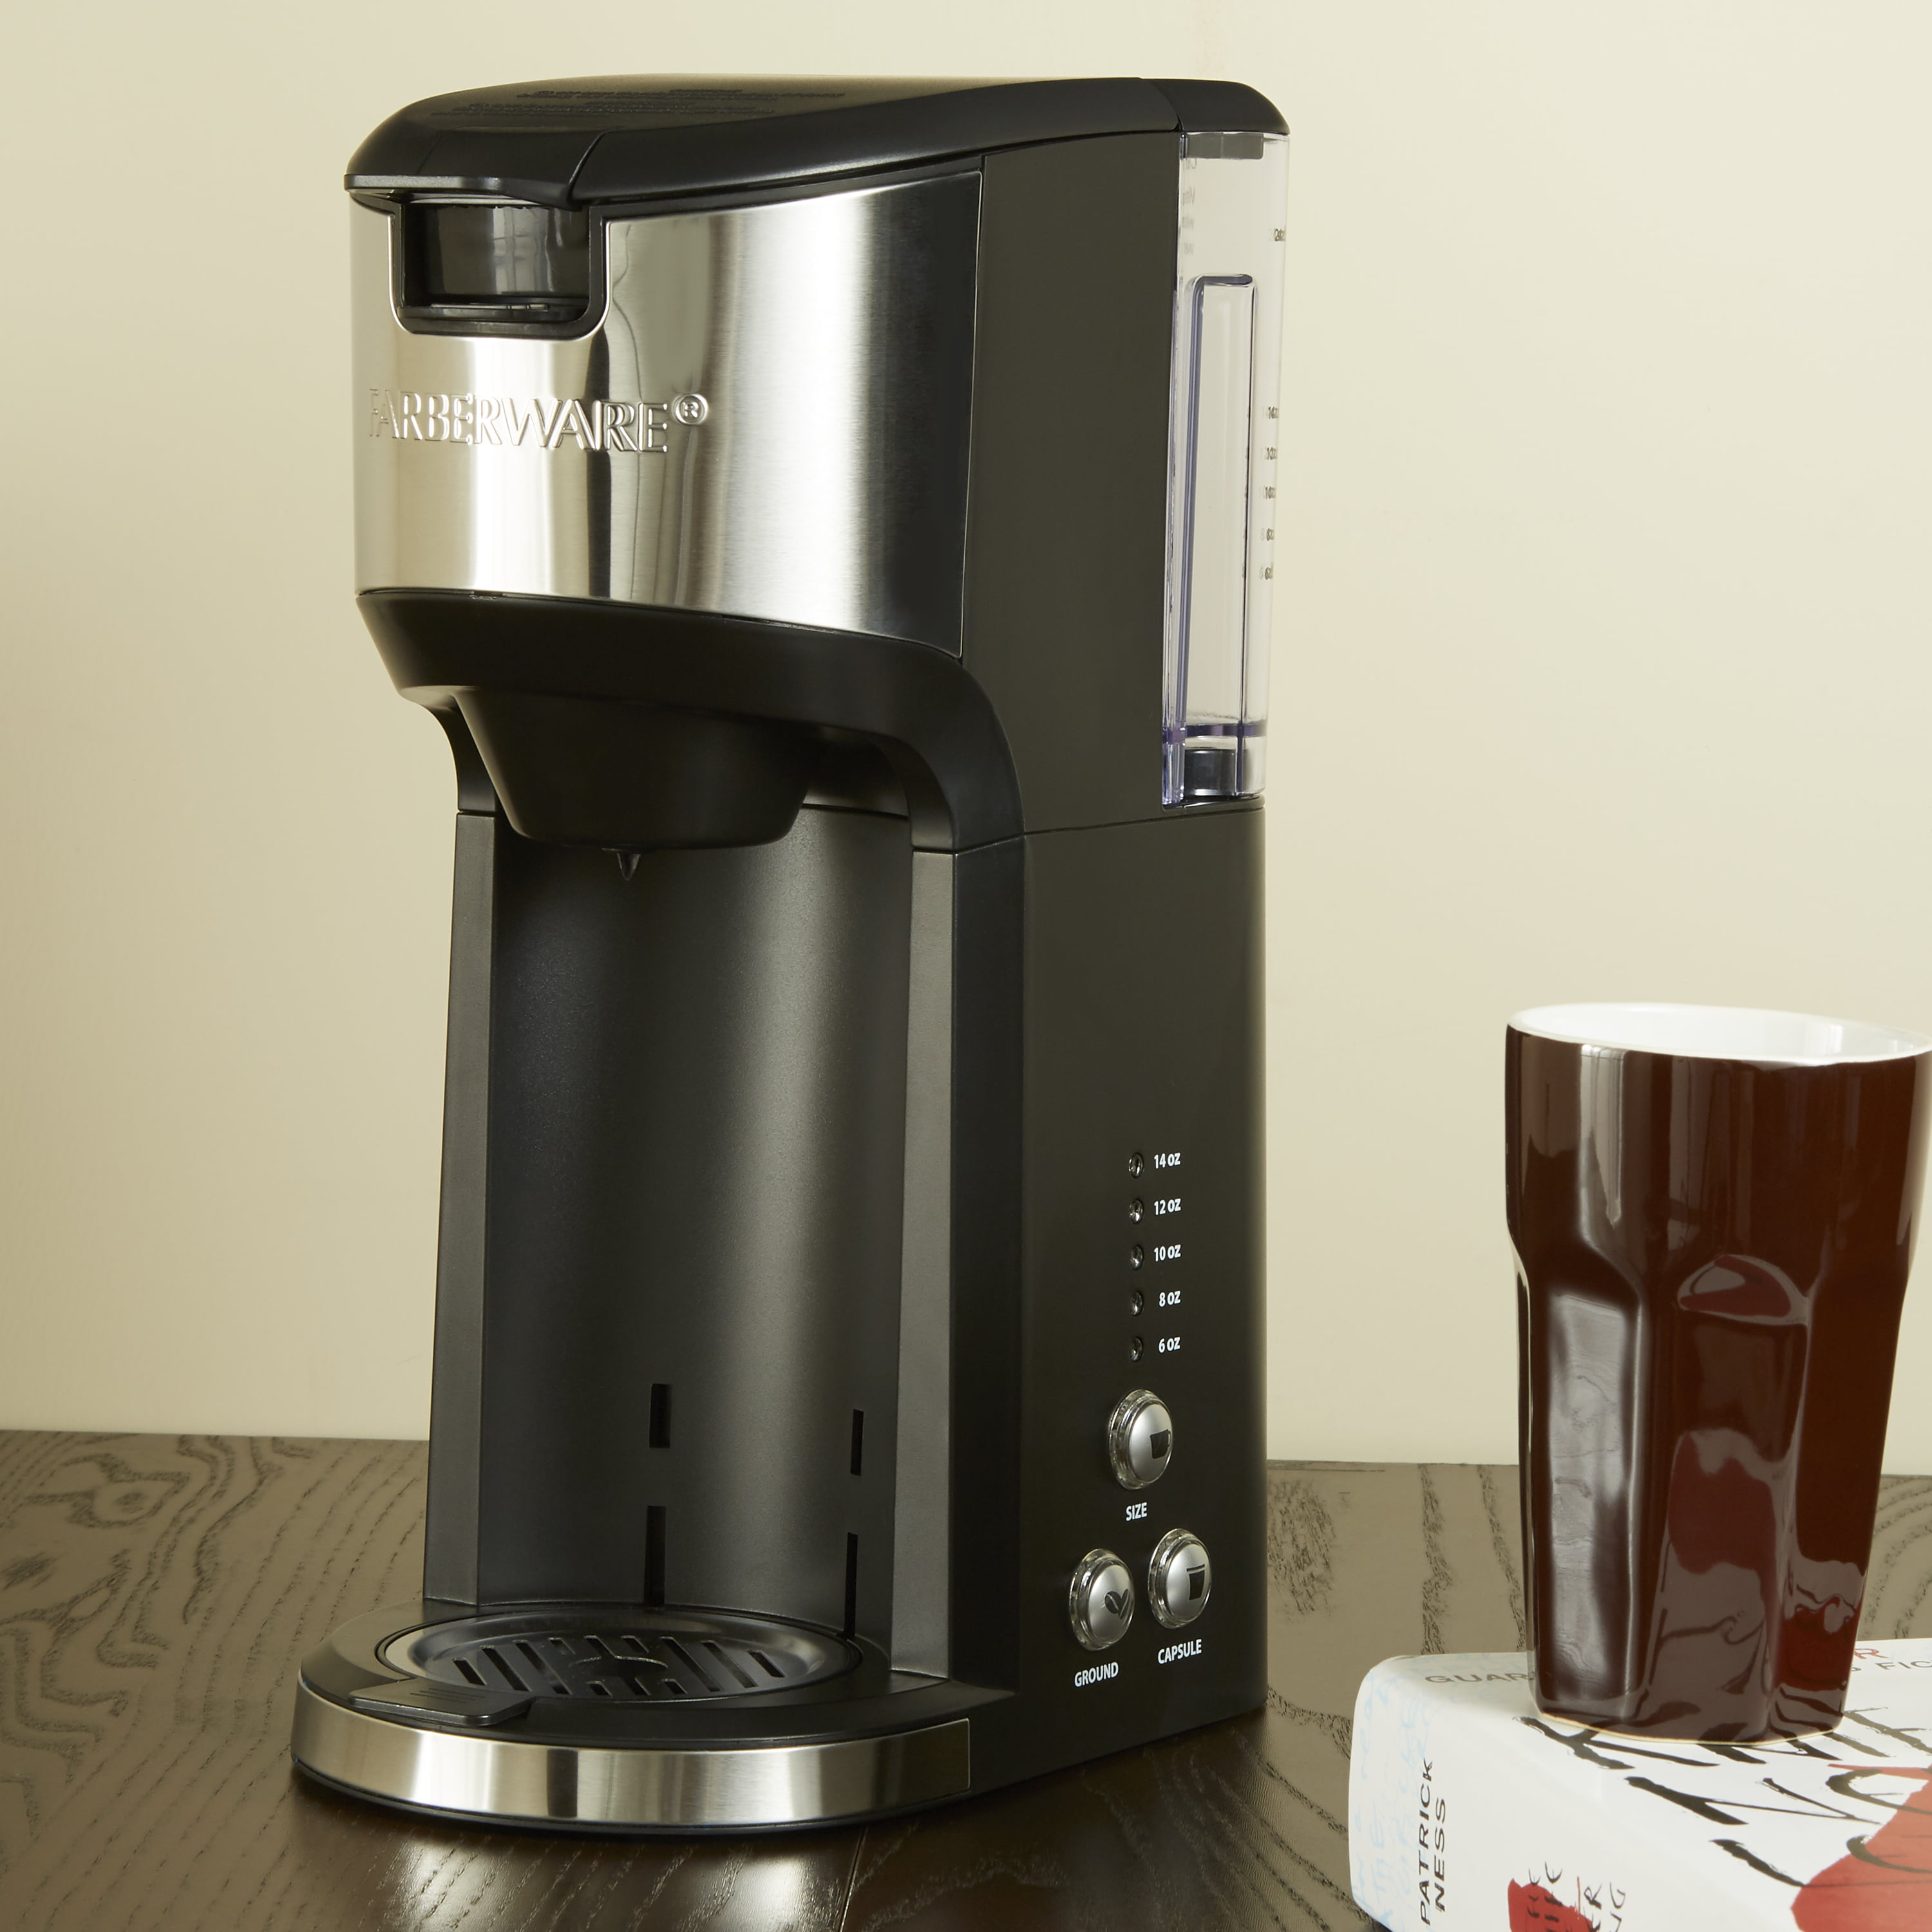 Farberware 9 Cup High Temperature Drip Coffee Maker, 1.35 Liter  Capacity,Black，New condition